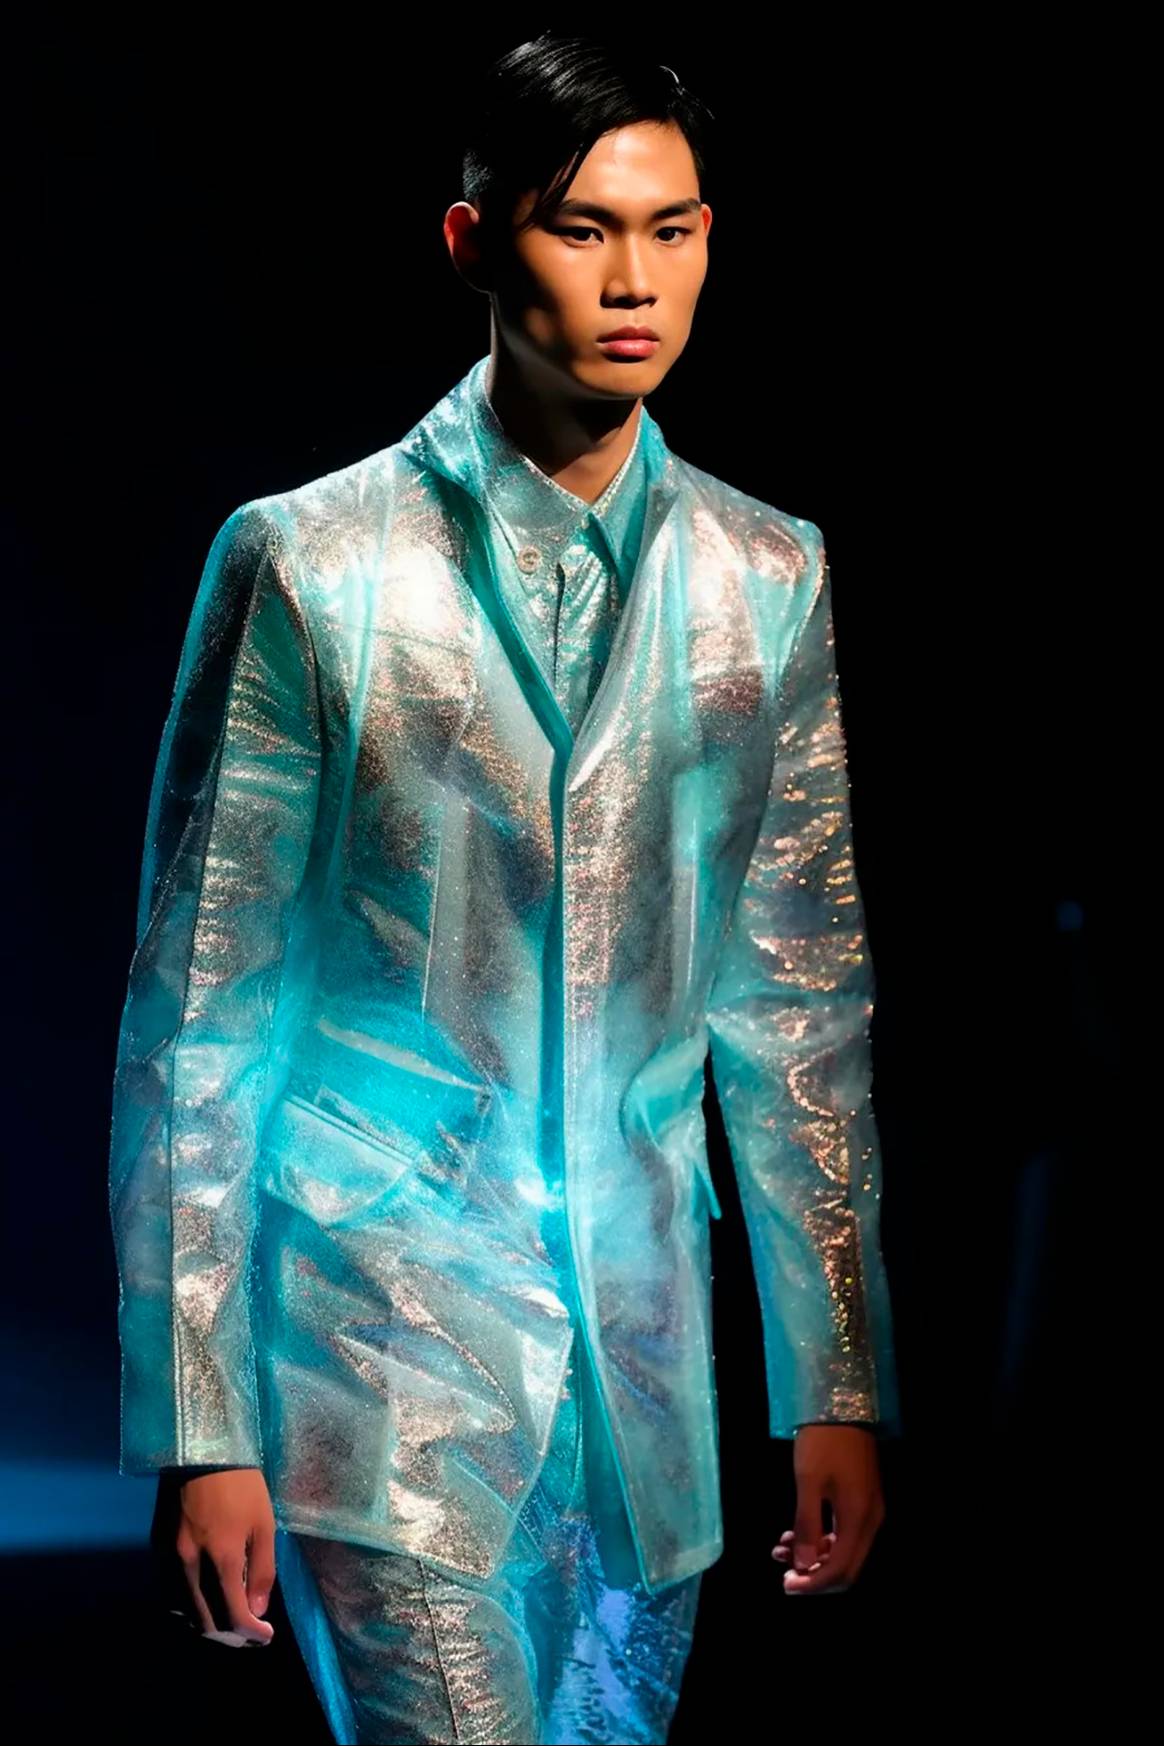 Photo Credits: Colección “Atlantis Luminescence” de Chu. IA Fashion Week, página oficial.